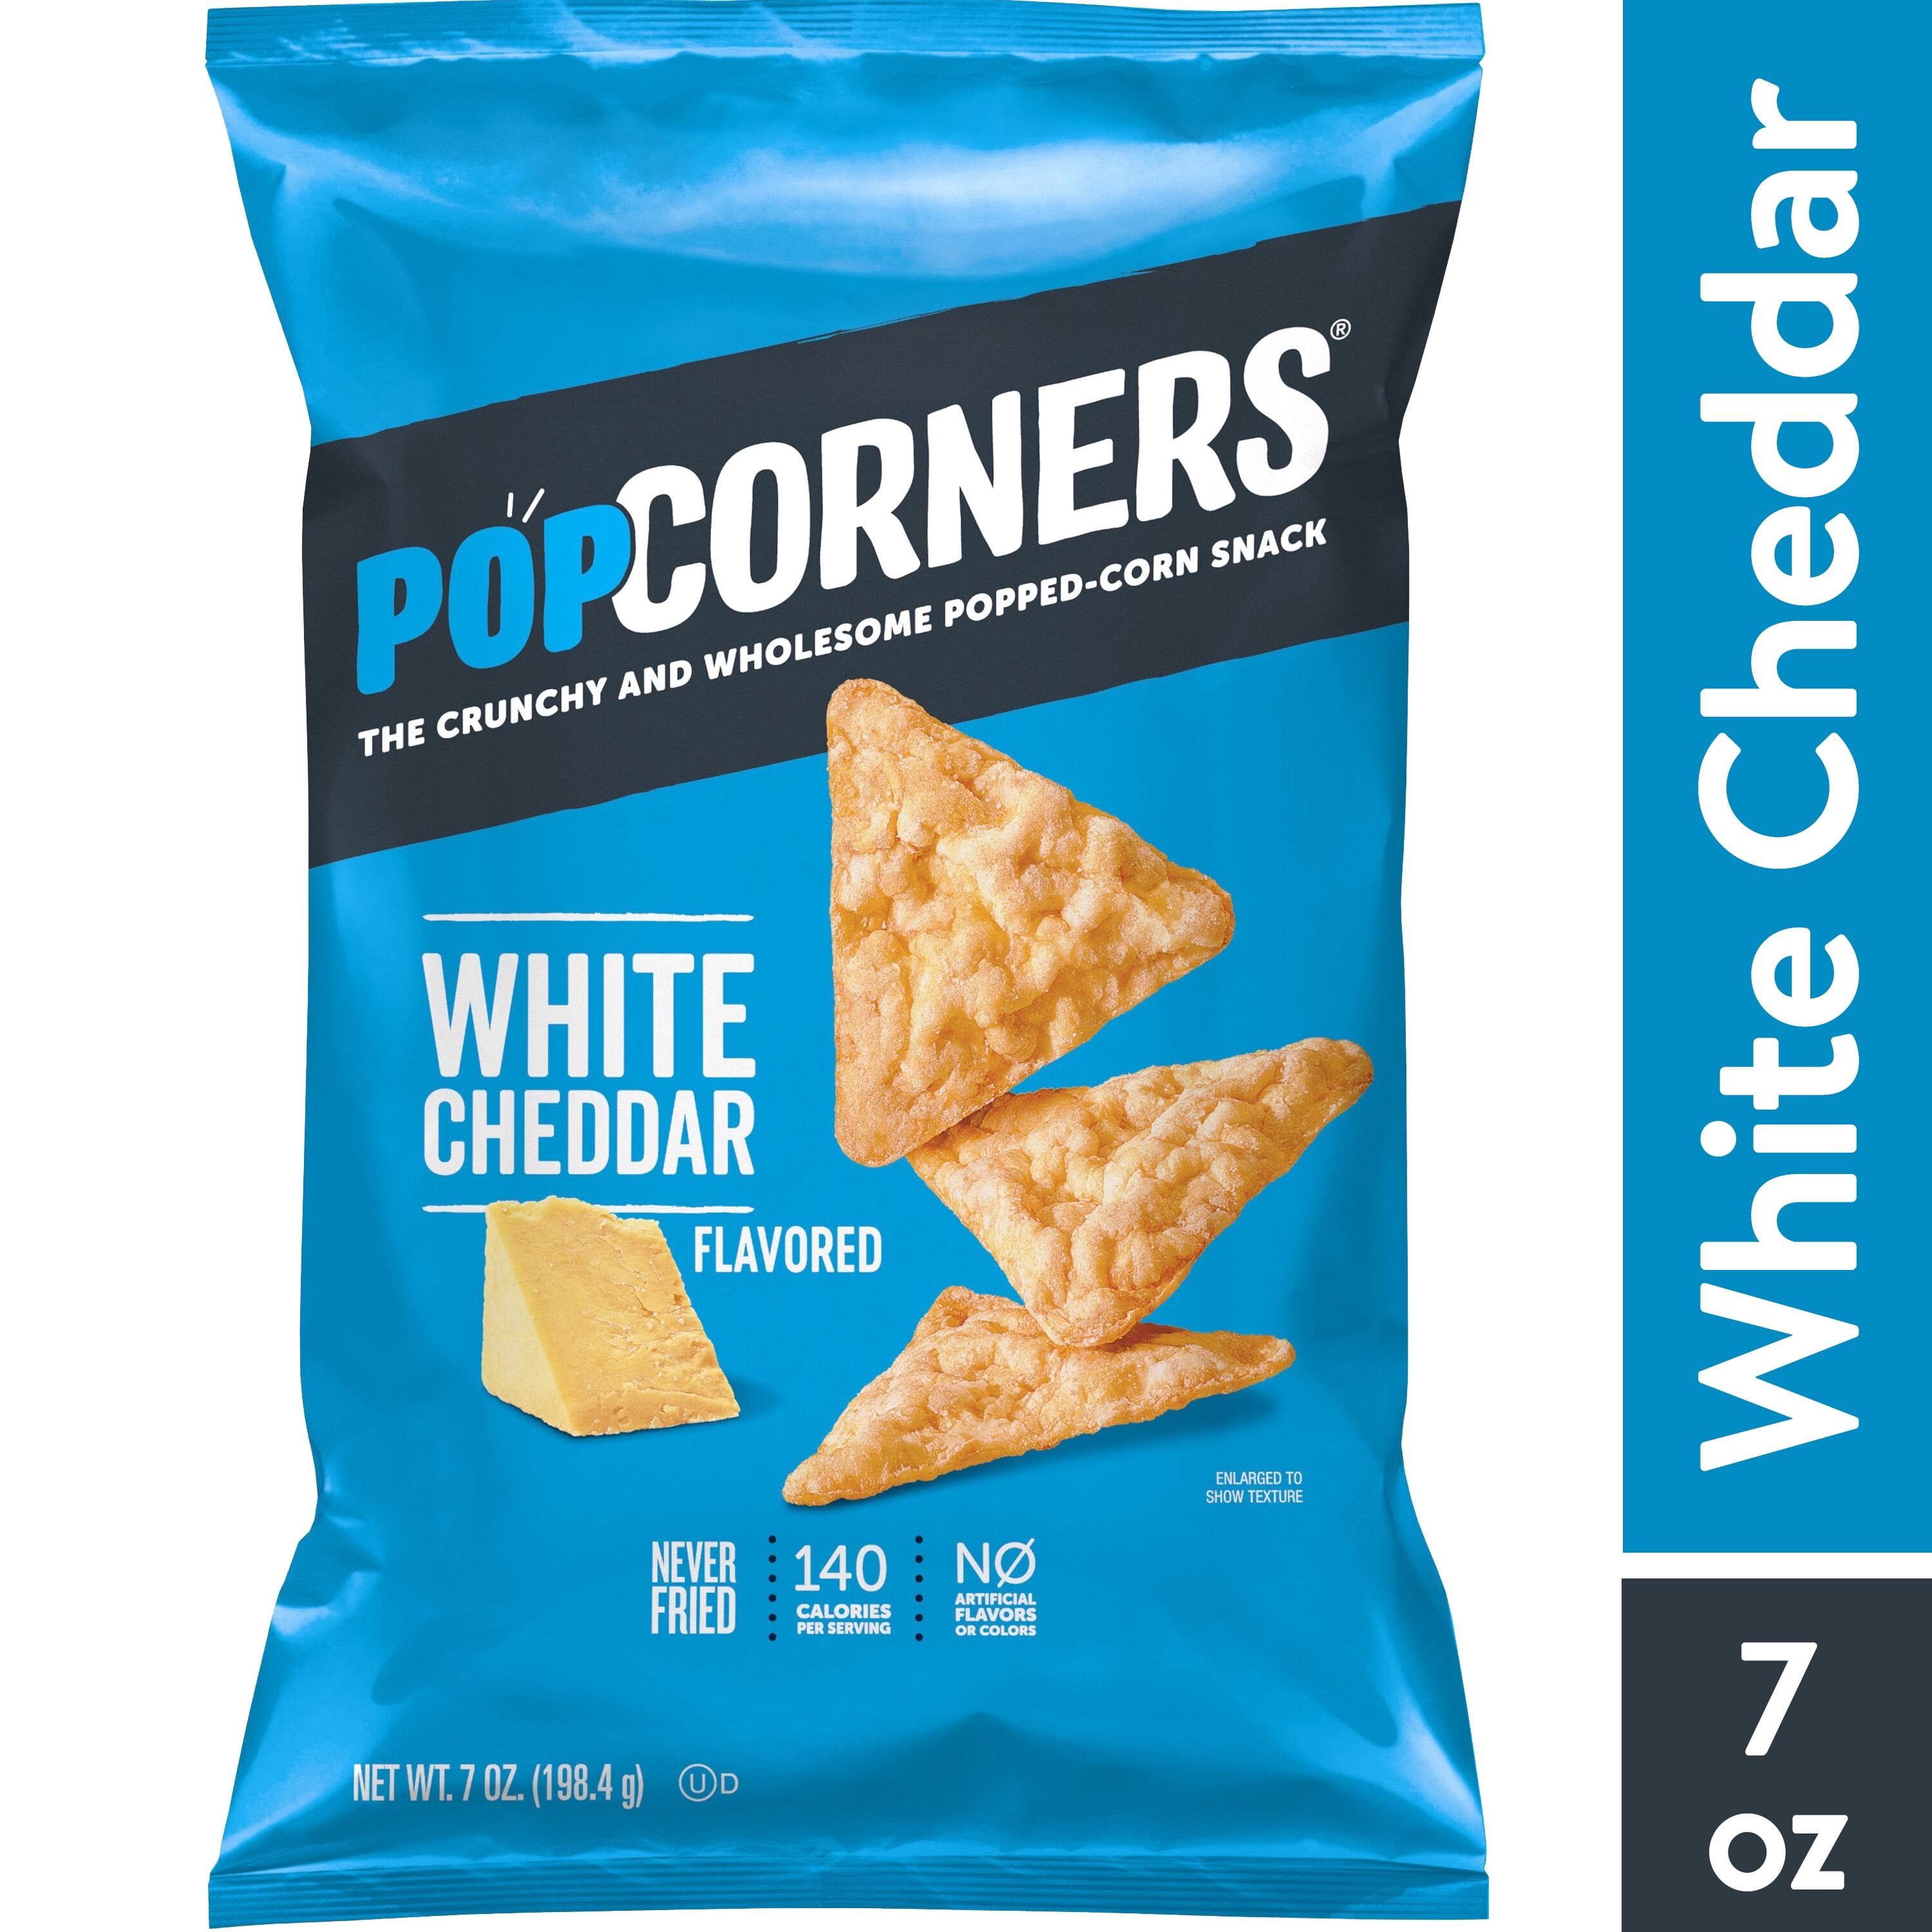 Popcorners White Cheddar Gluten Free Popped Corn Snacks, 7 oz Bag